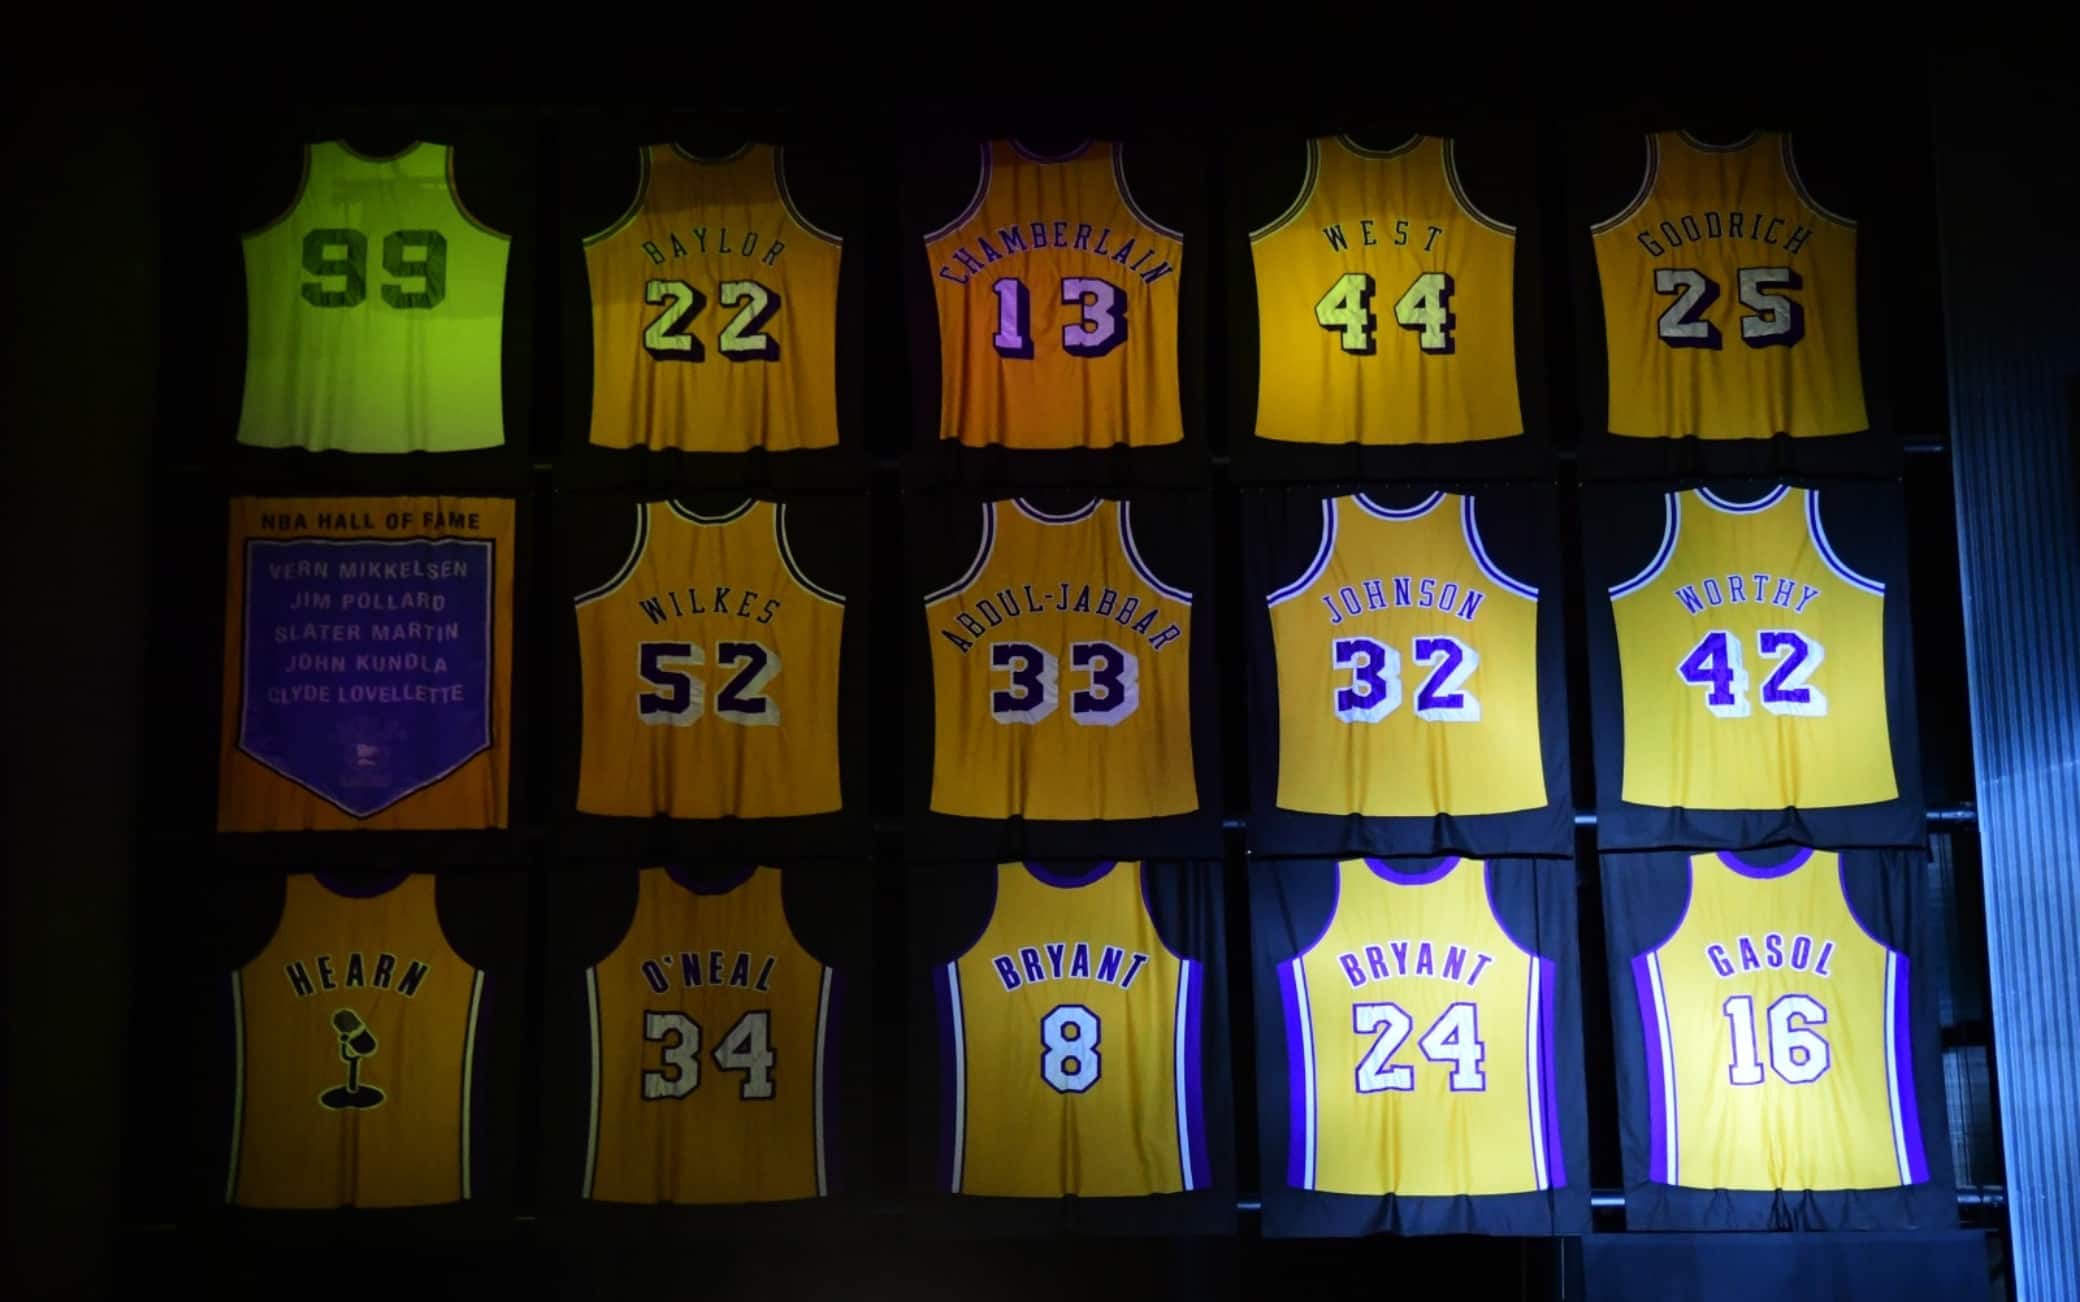 Iconic NBA numbers: #32 – Magic Johnson, Karl Malone, Kevin McHale